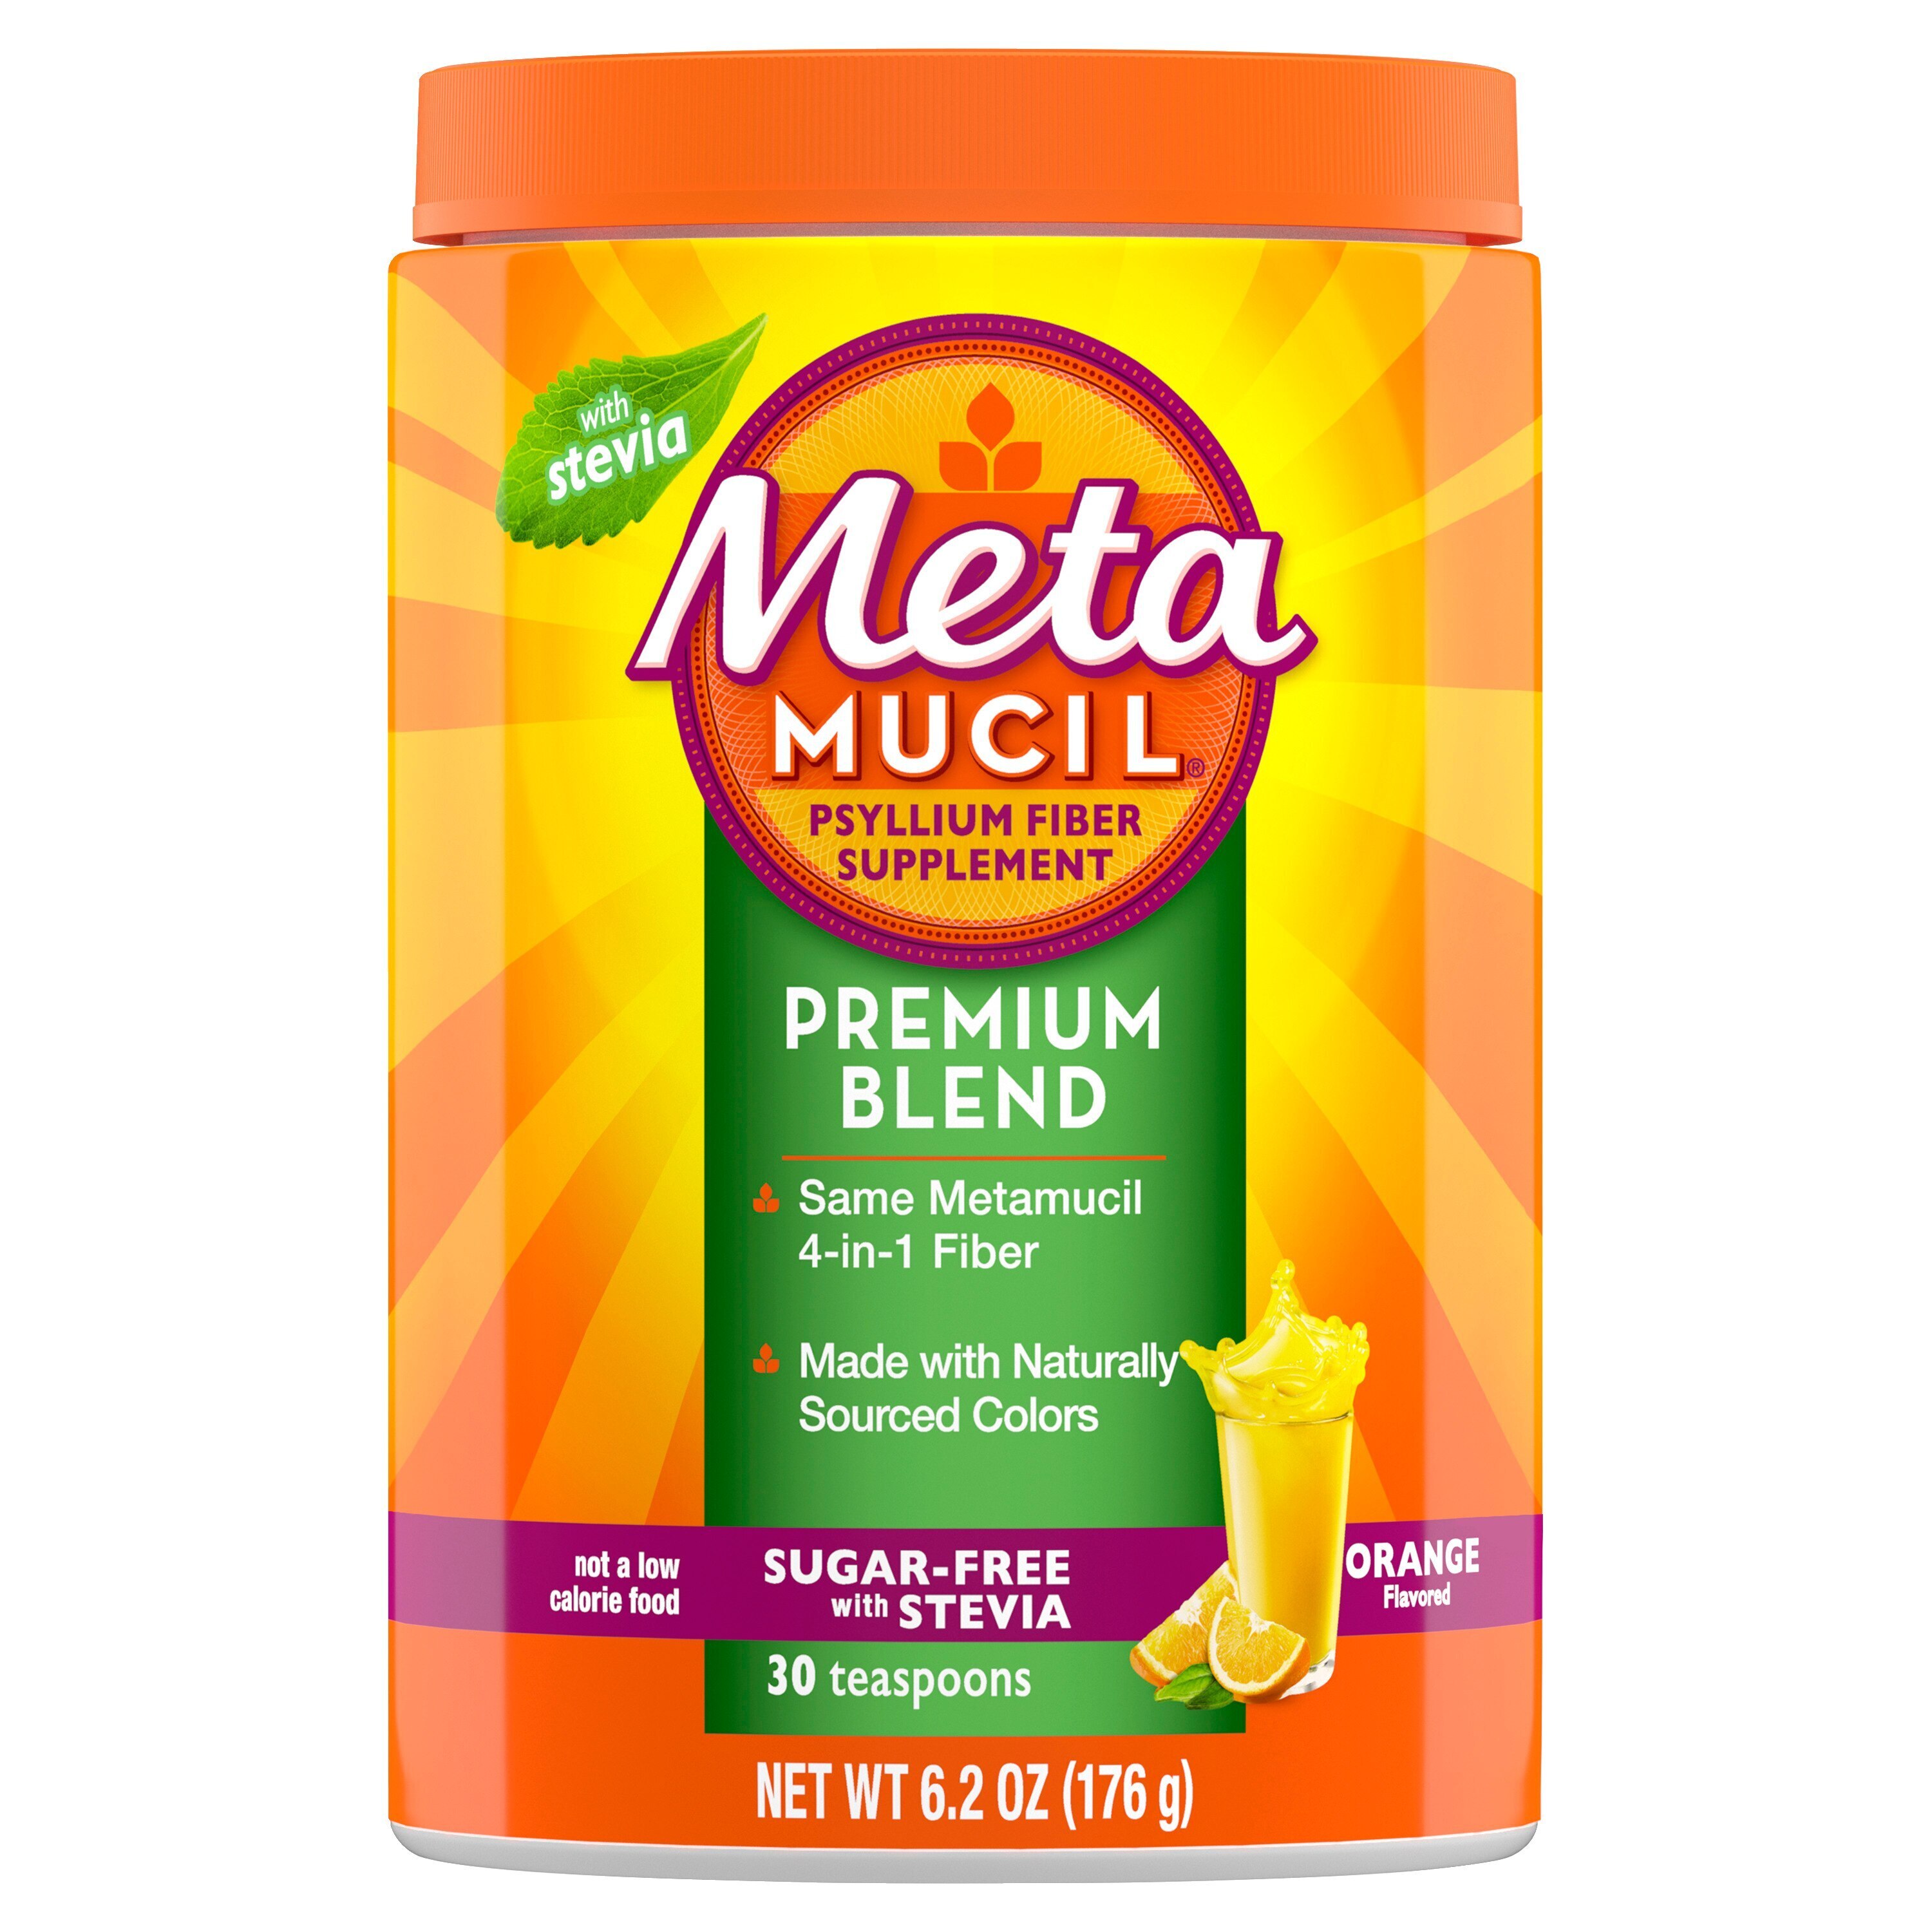 Metamucil Premium Blend, Daily Psyllium Fiber Powder Supplement, Orange, 30 Servings